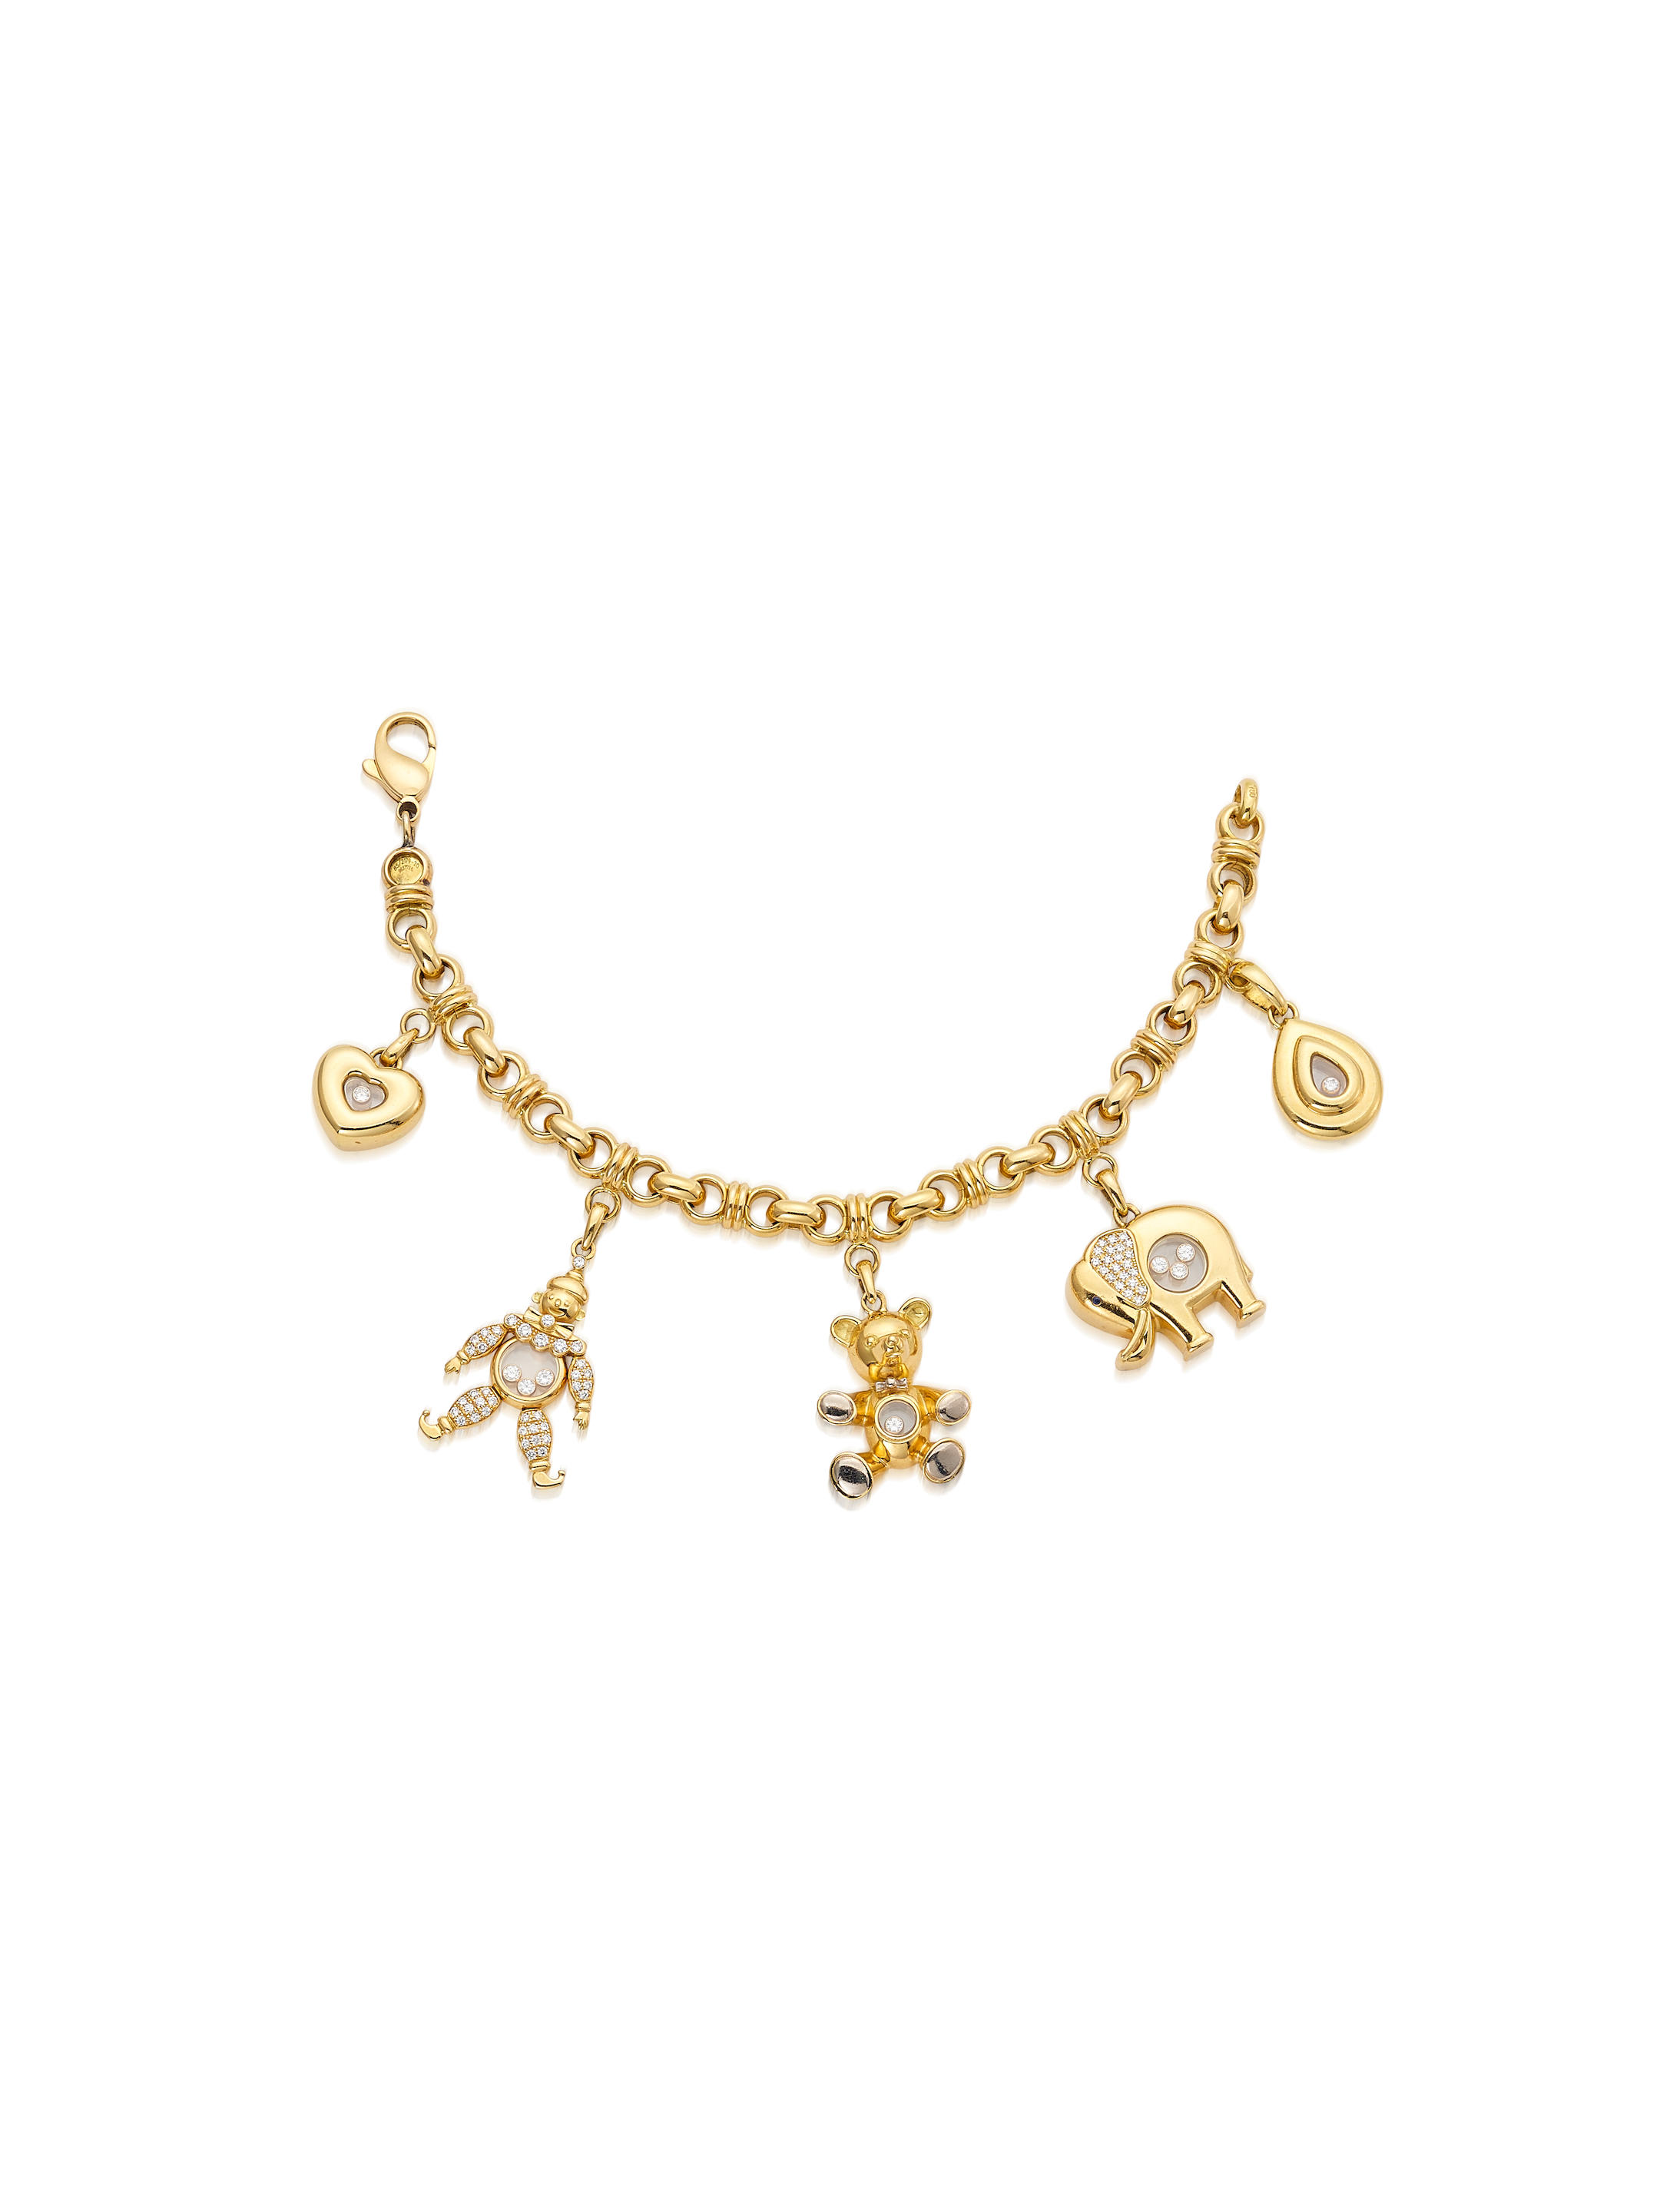 Bonhams : A 'Happy Diamonds' Charm Bracelet, by Chopard